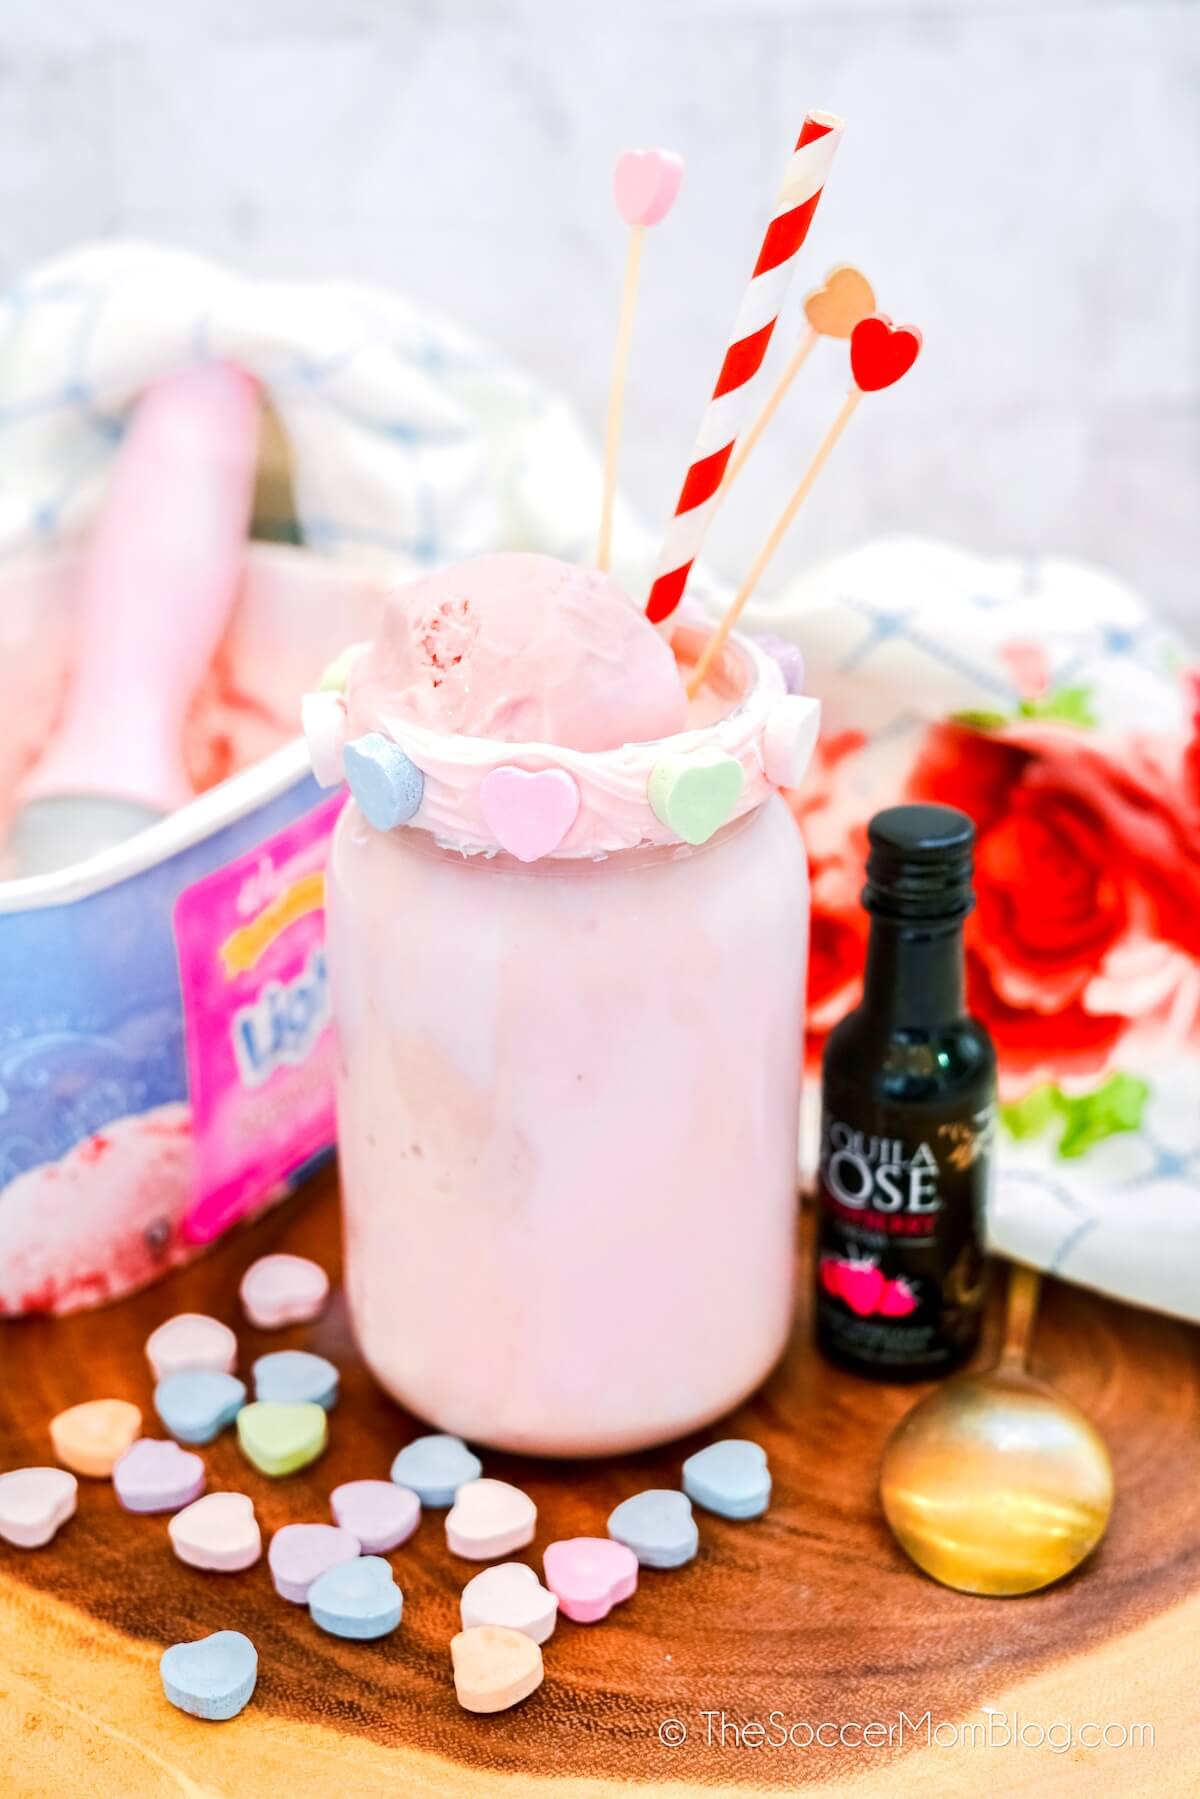 strawberry Valentine milkshake next to ice cream carton and tequila rose bottle